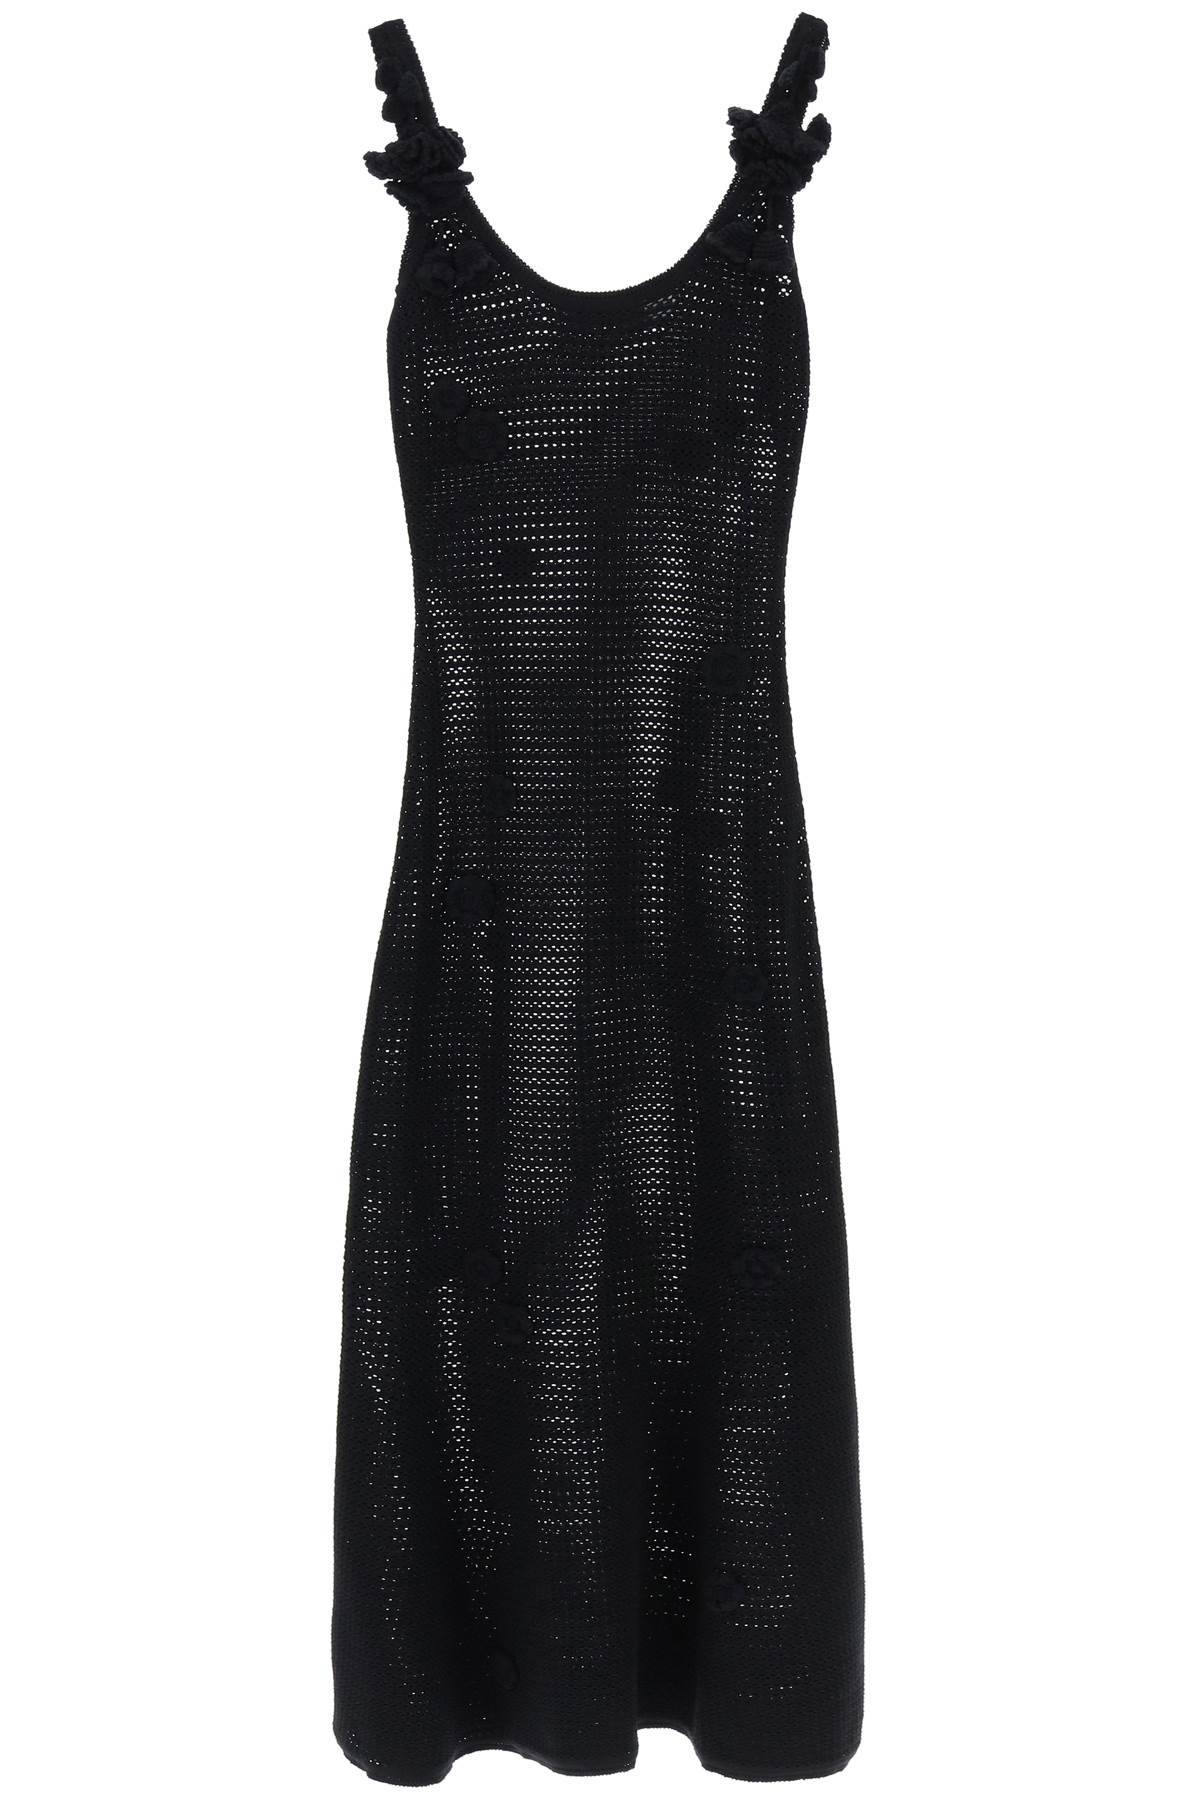 Self-portrait Crochet Midi Dress In Black